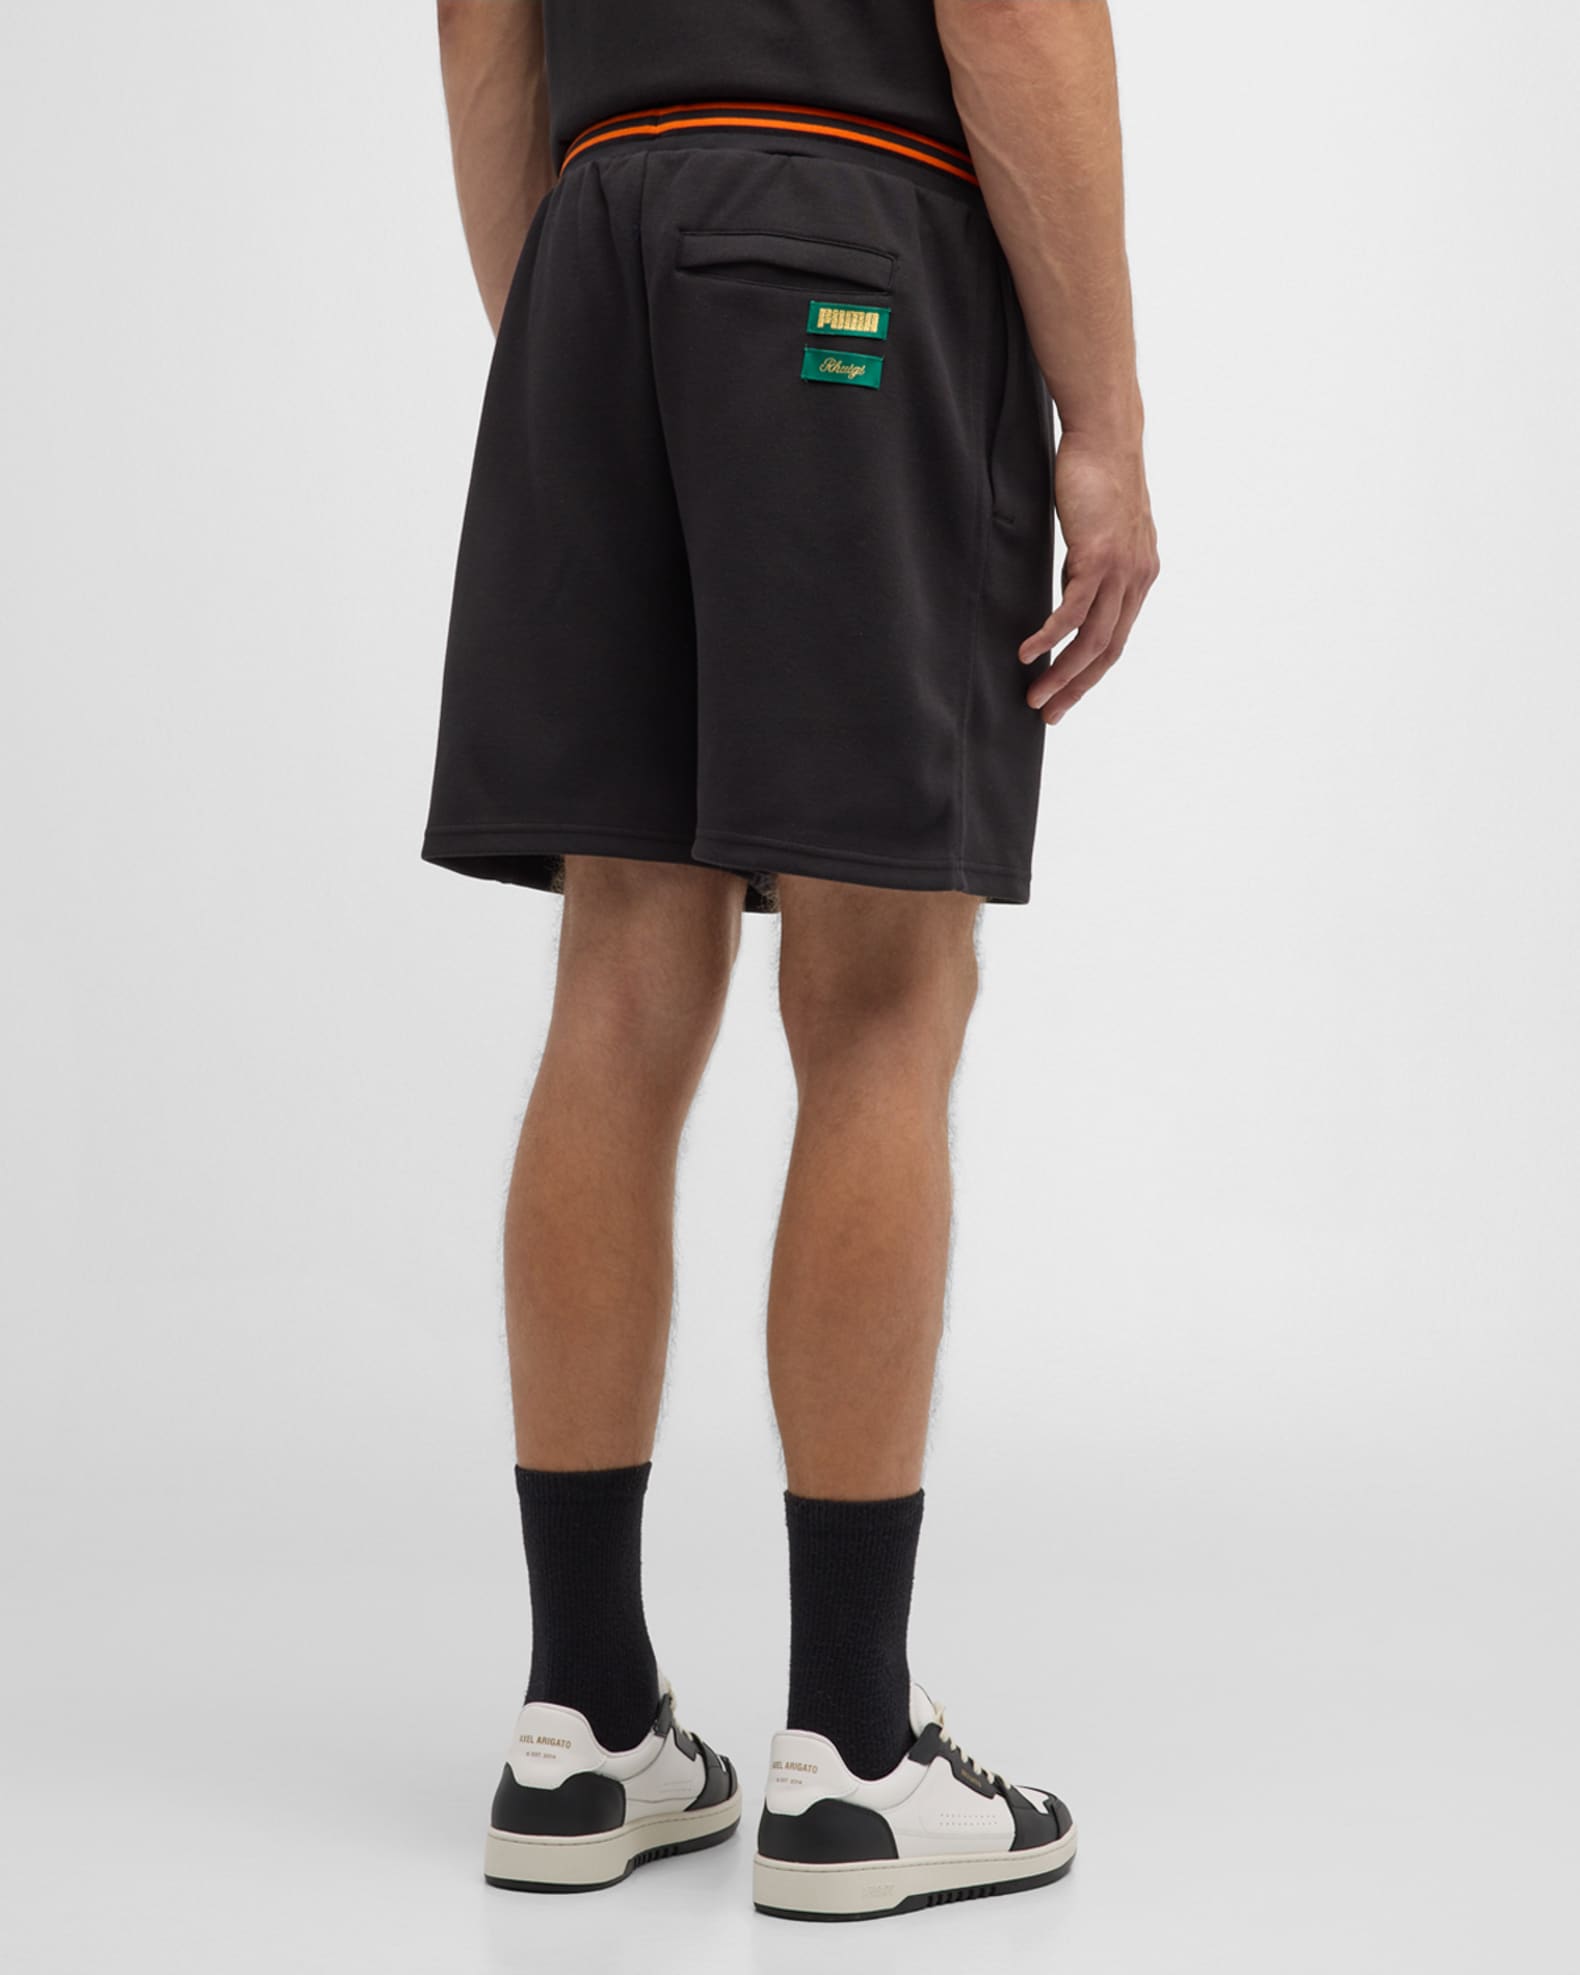 Puma Hoops woven basketball shorts in black